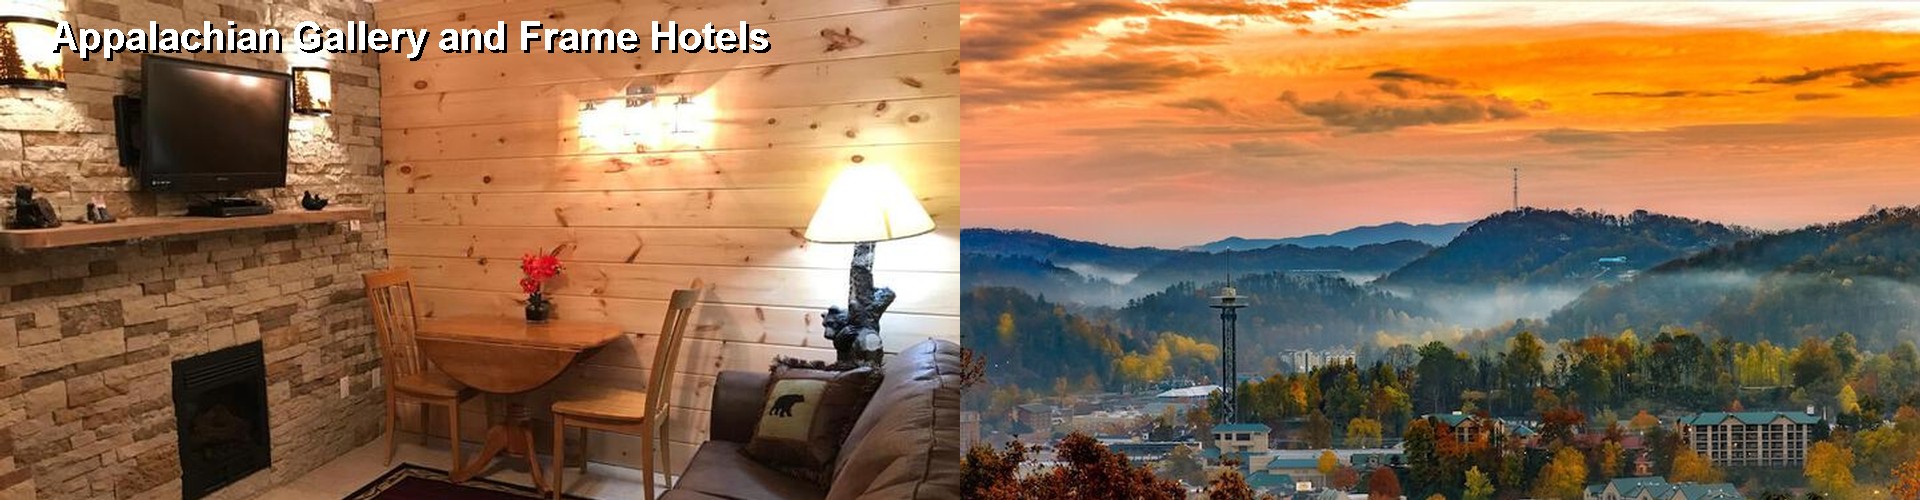 5 Best Hotels near Appalachian Gallery and Frame